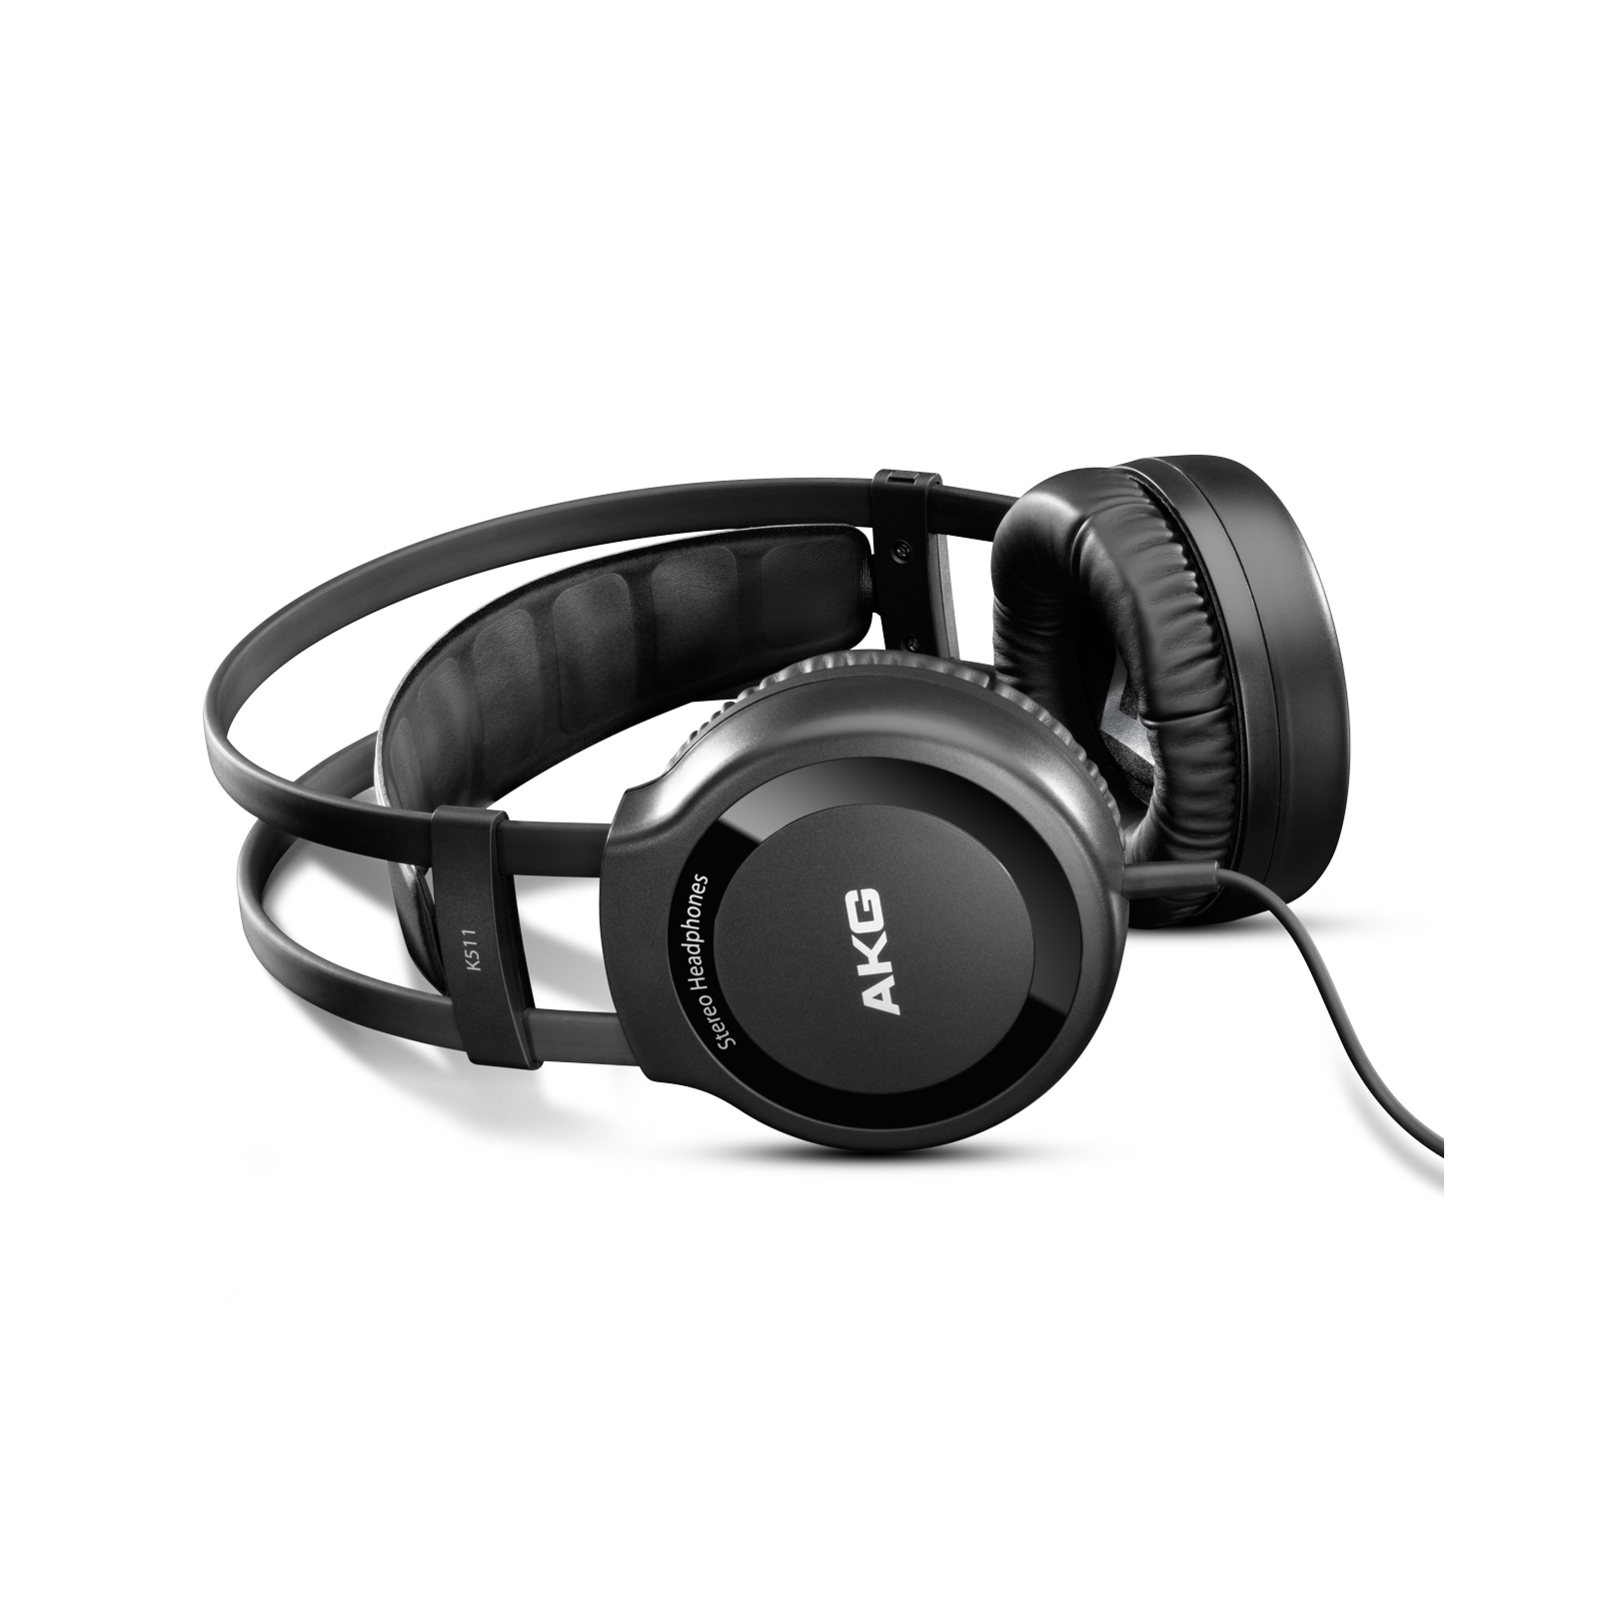 K 511 - Black - Natural sound stereo headphones with great audio balance - Hero